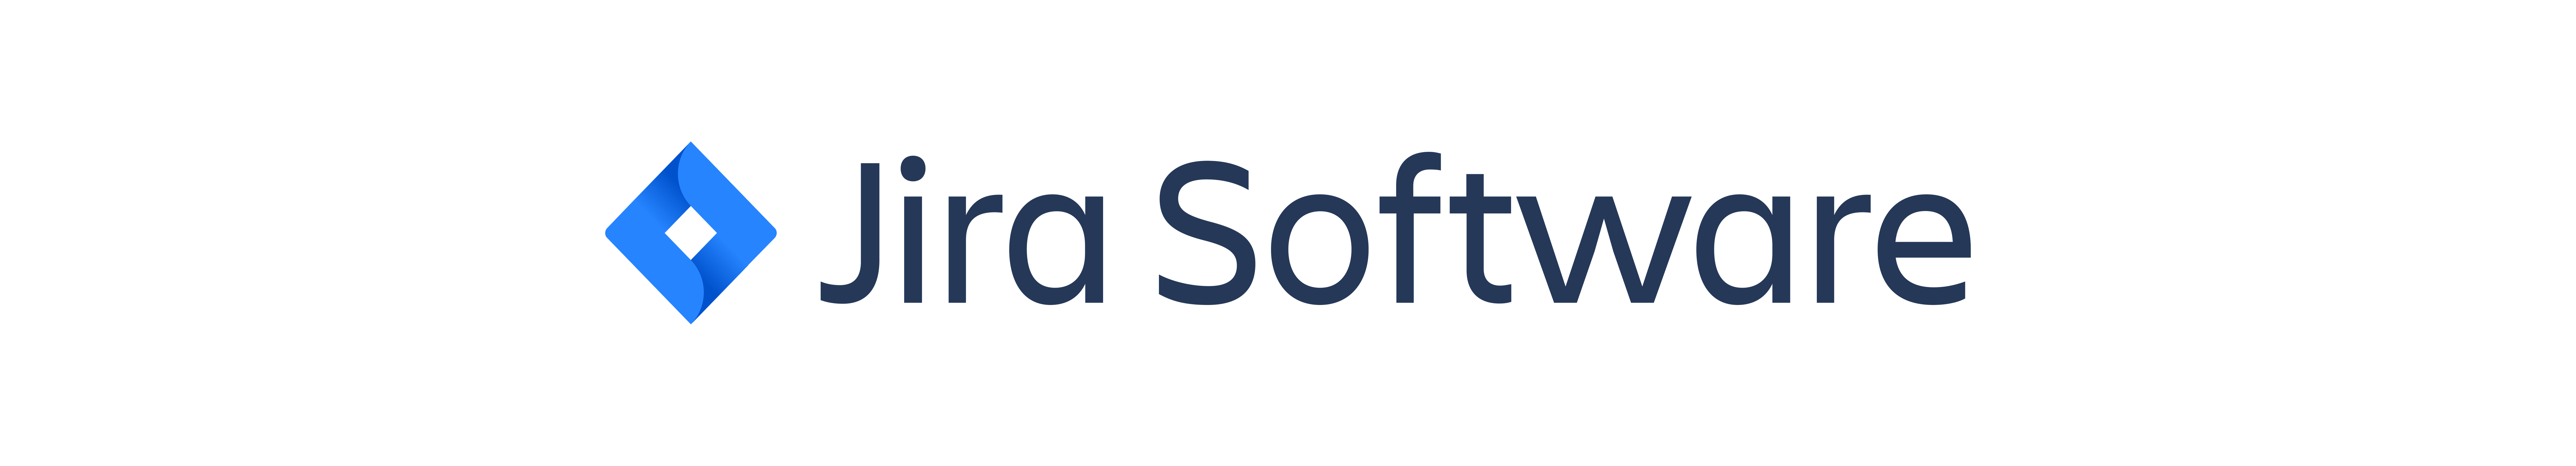 JiraSoftware-standard_logo